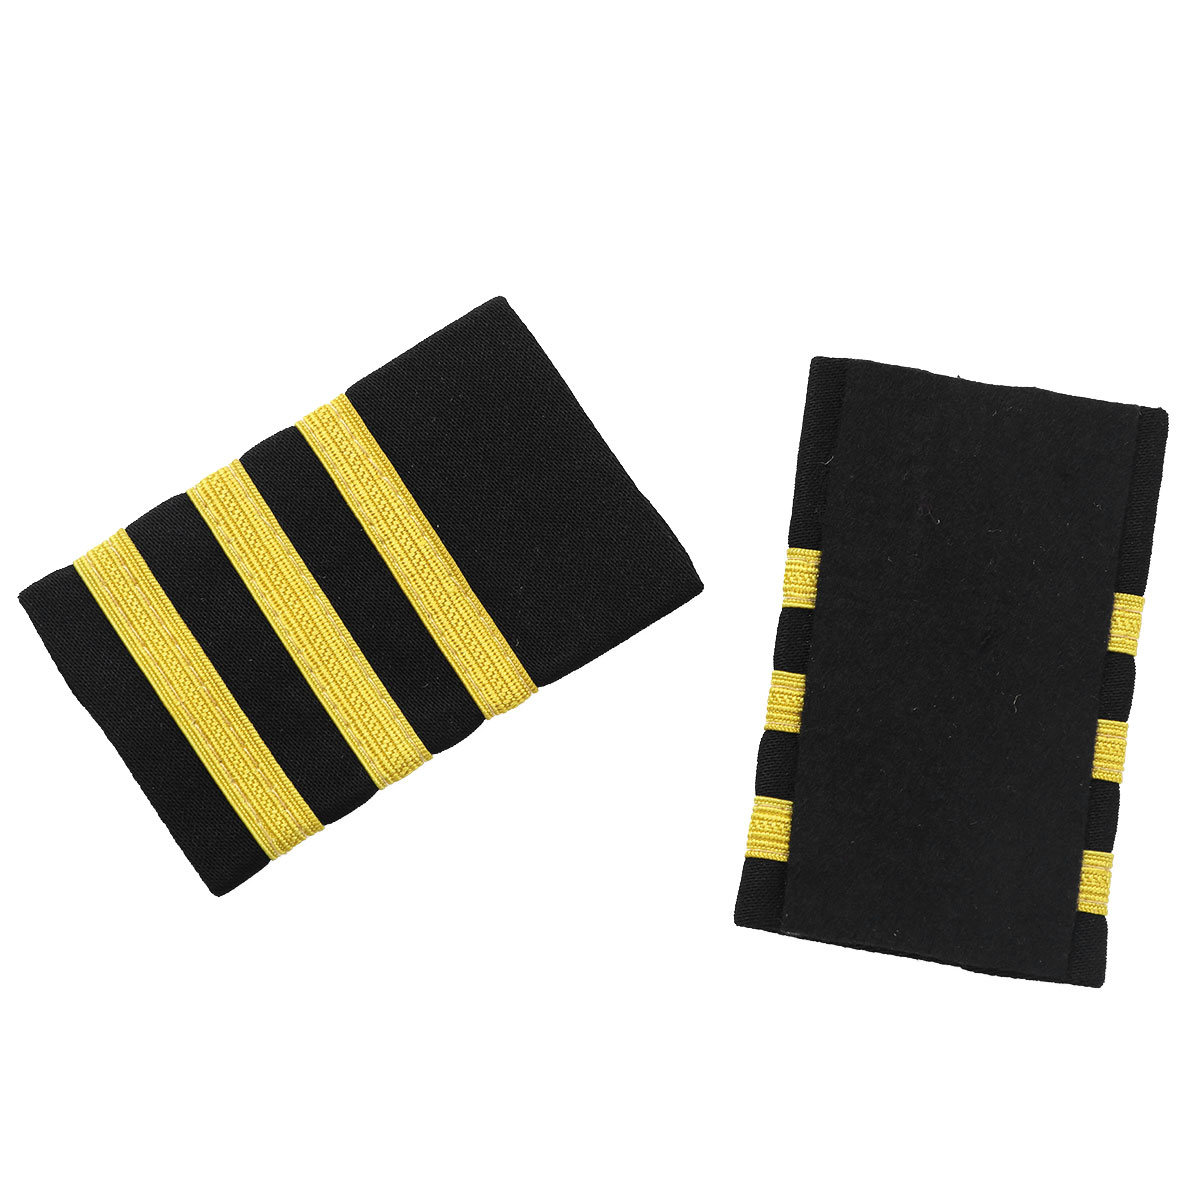 Epaulettes Pilot Shirt Uniform Epaulets with Gold Stripe Shoulder Bad EW